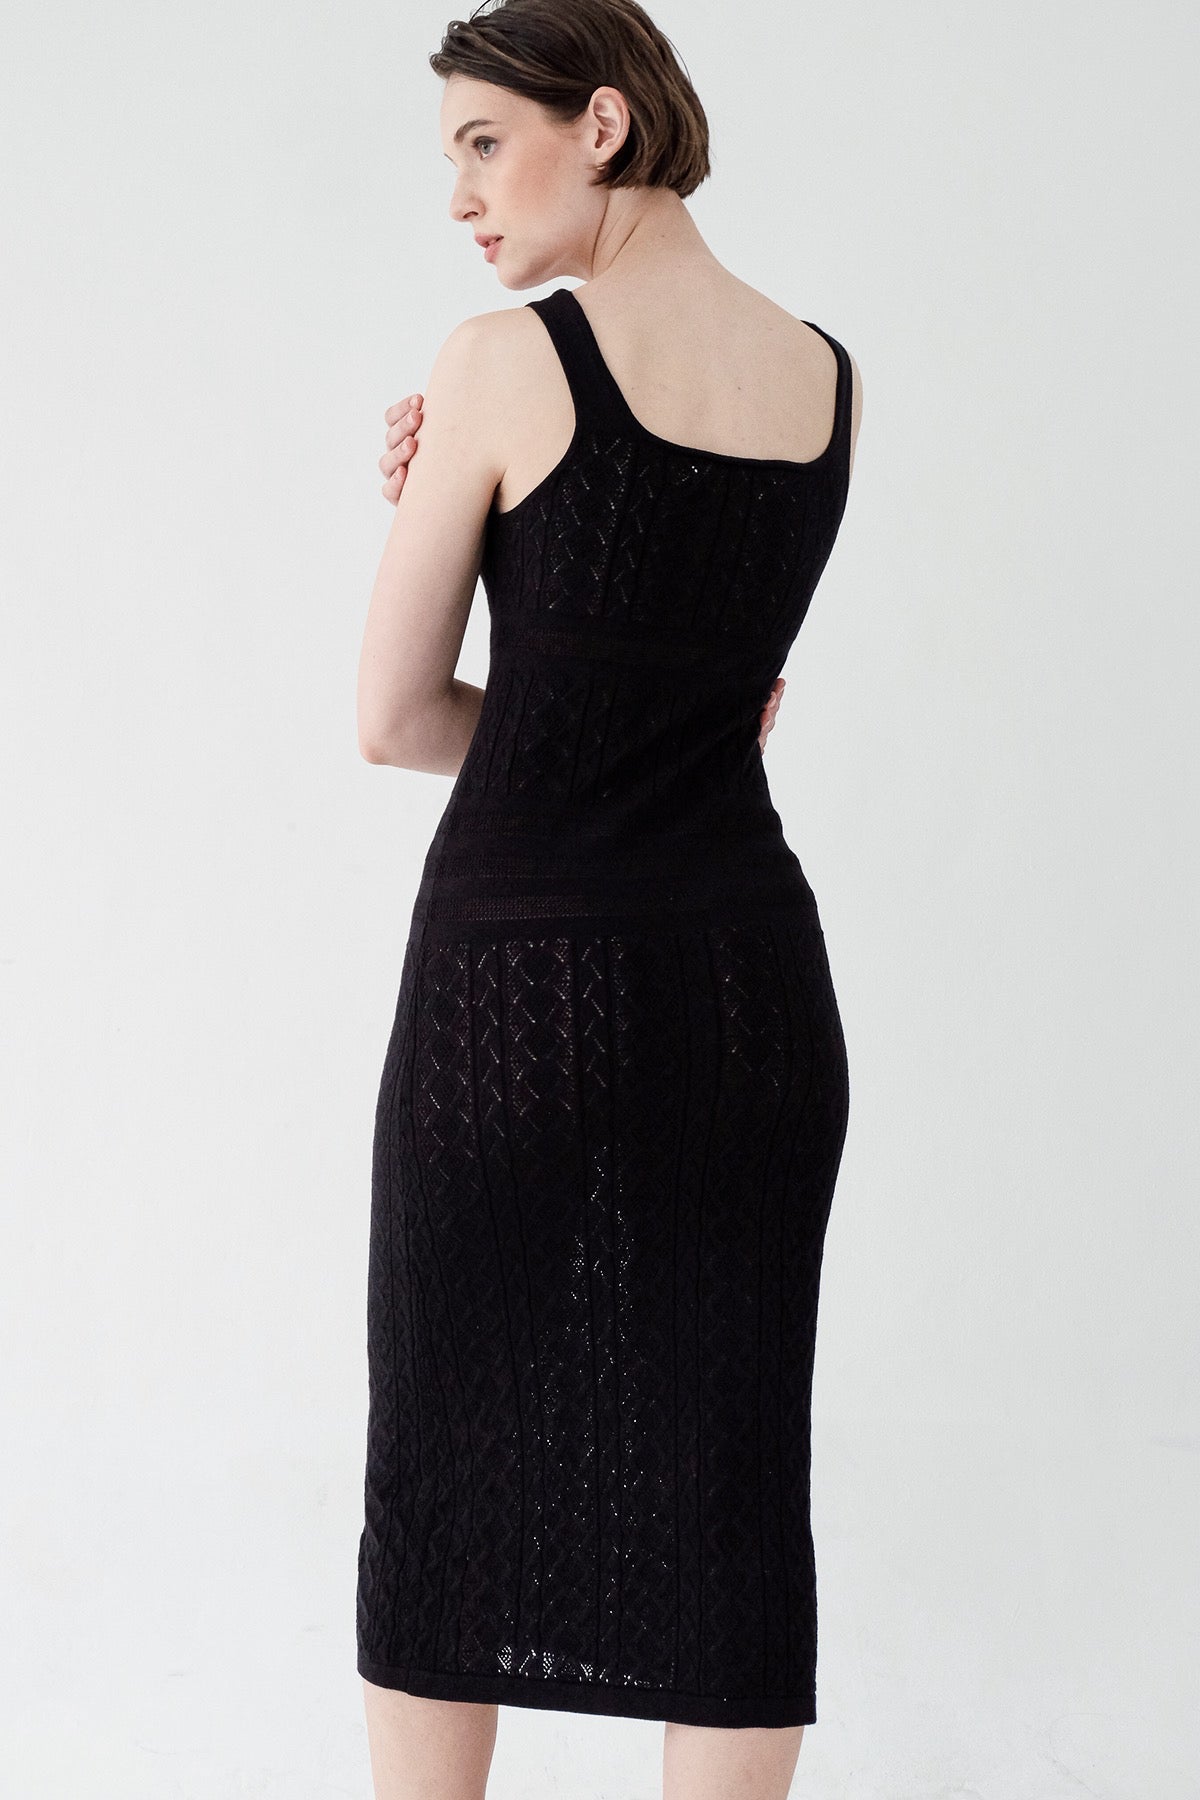 Eterne Dress in Black (1 LEFT)